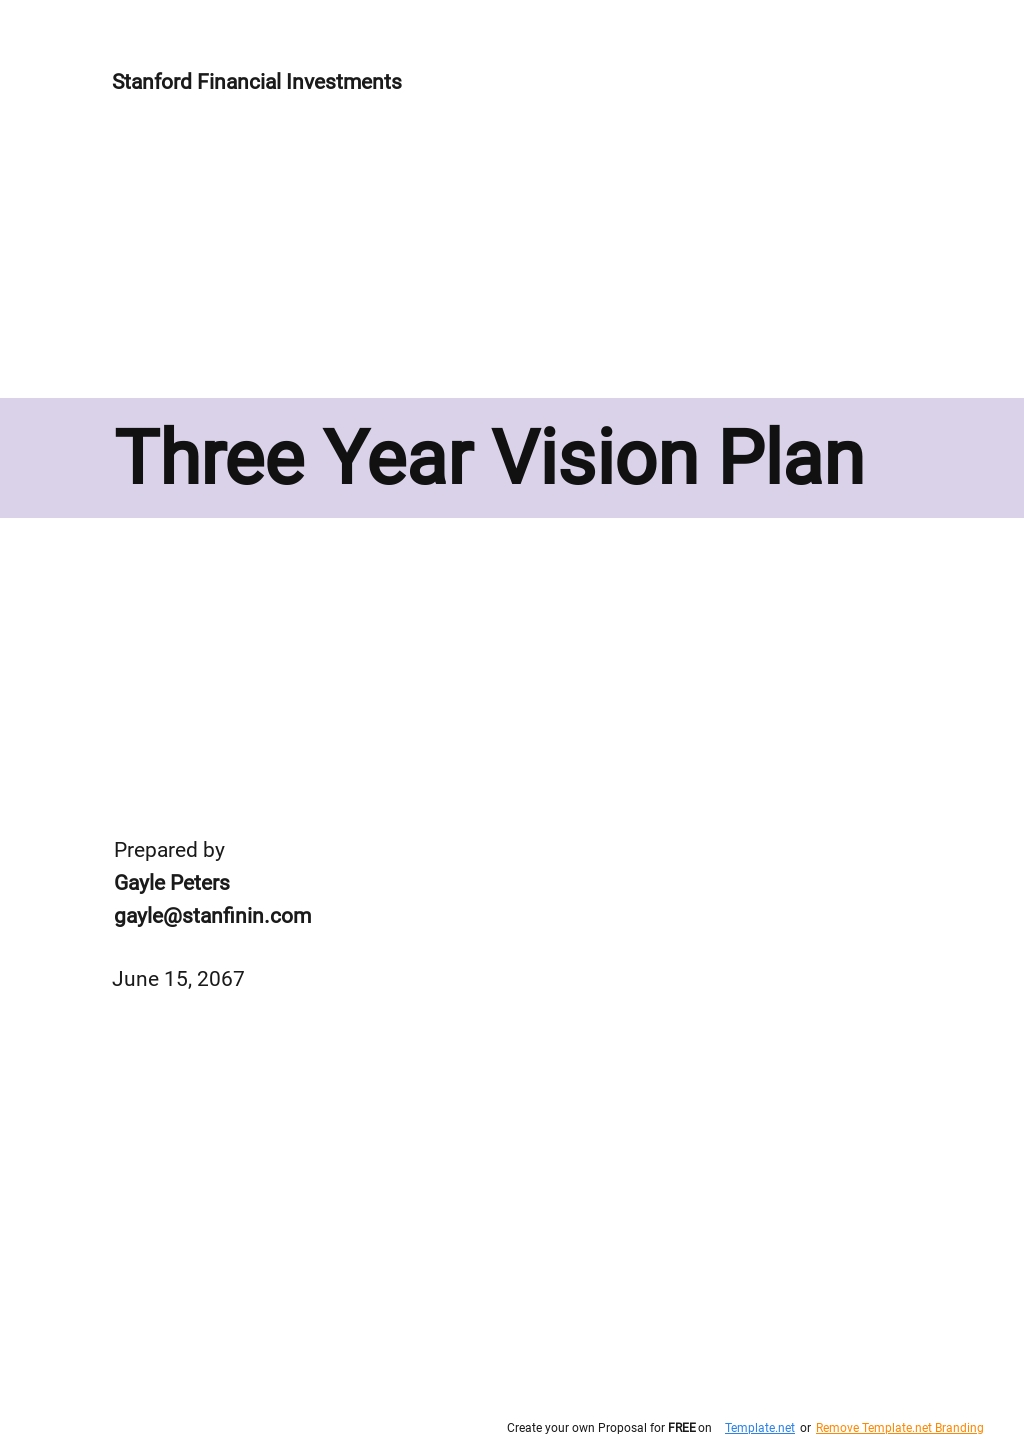 Three Year Vision Plan Template.jpe